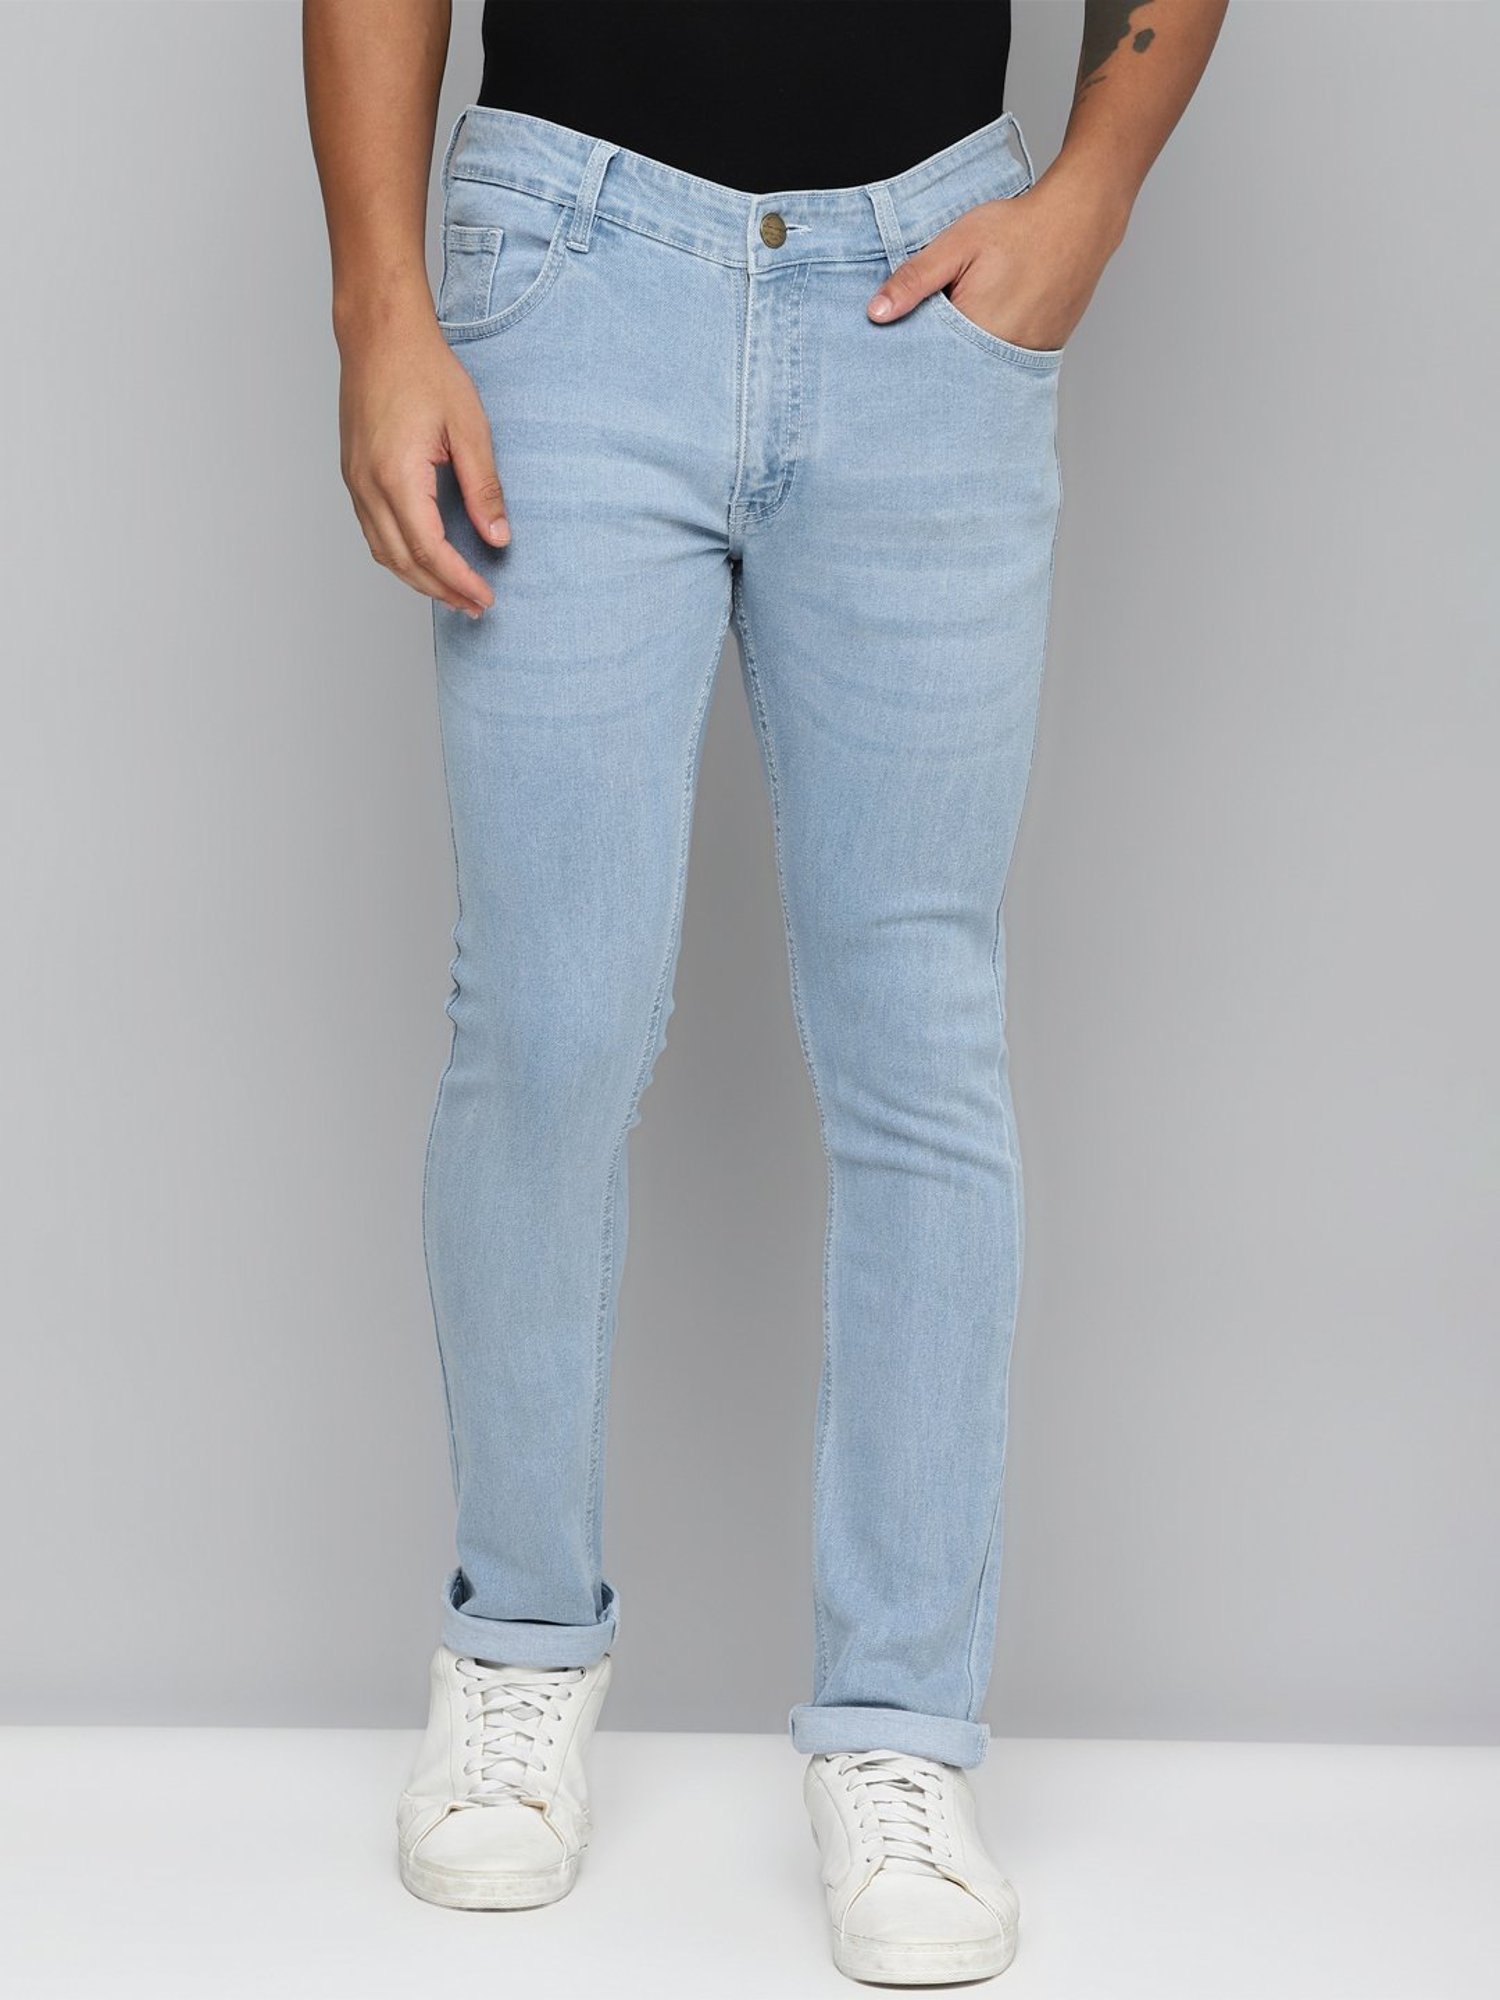 Buy Urbano Fashion Men Light Blue Slim Fit Washed Jeans Stretchable online